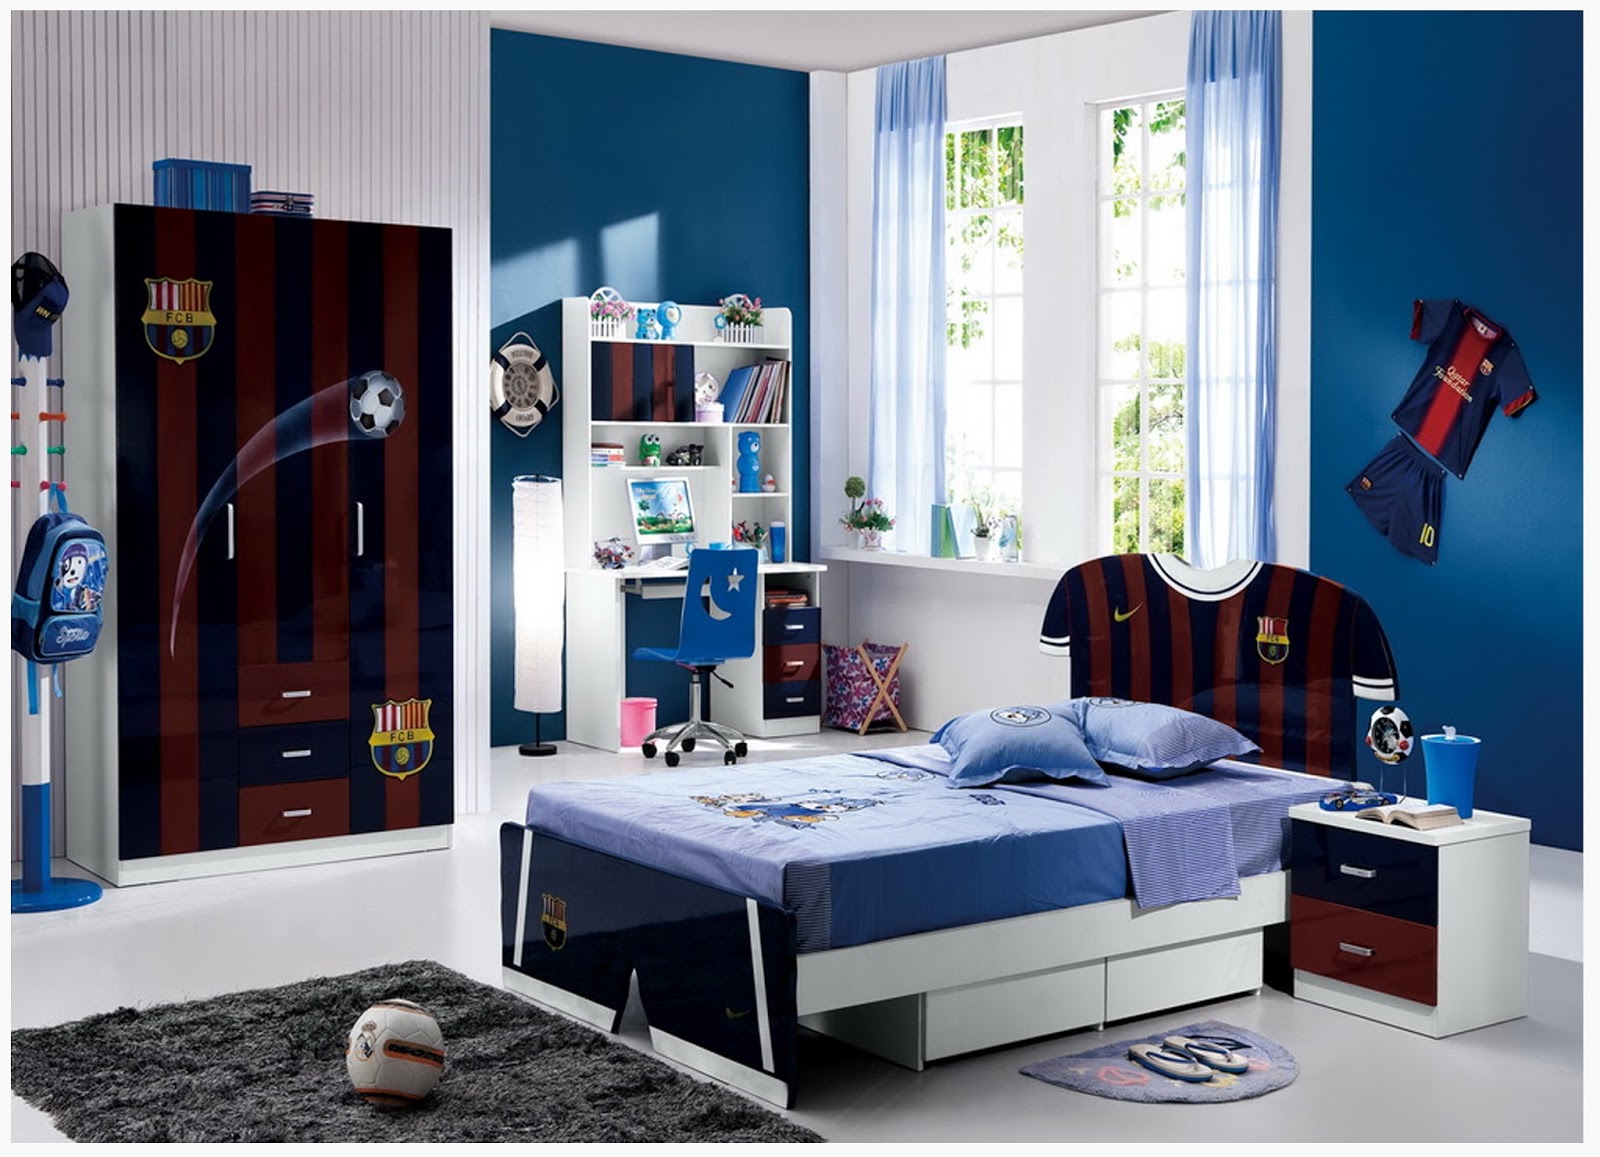 barcelona wallpaper for bedroom,bedroom,furniture,bed,room,mattress